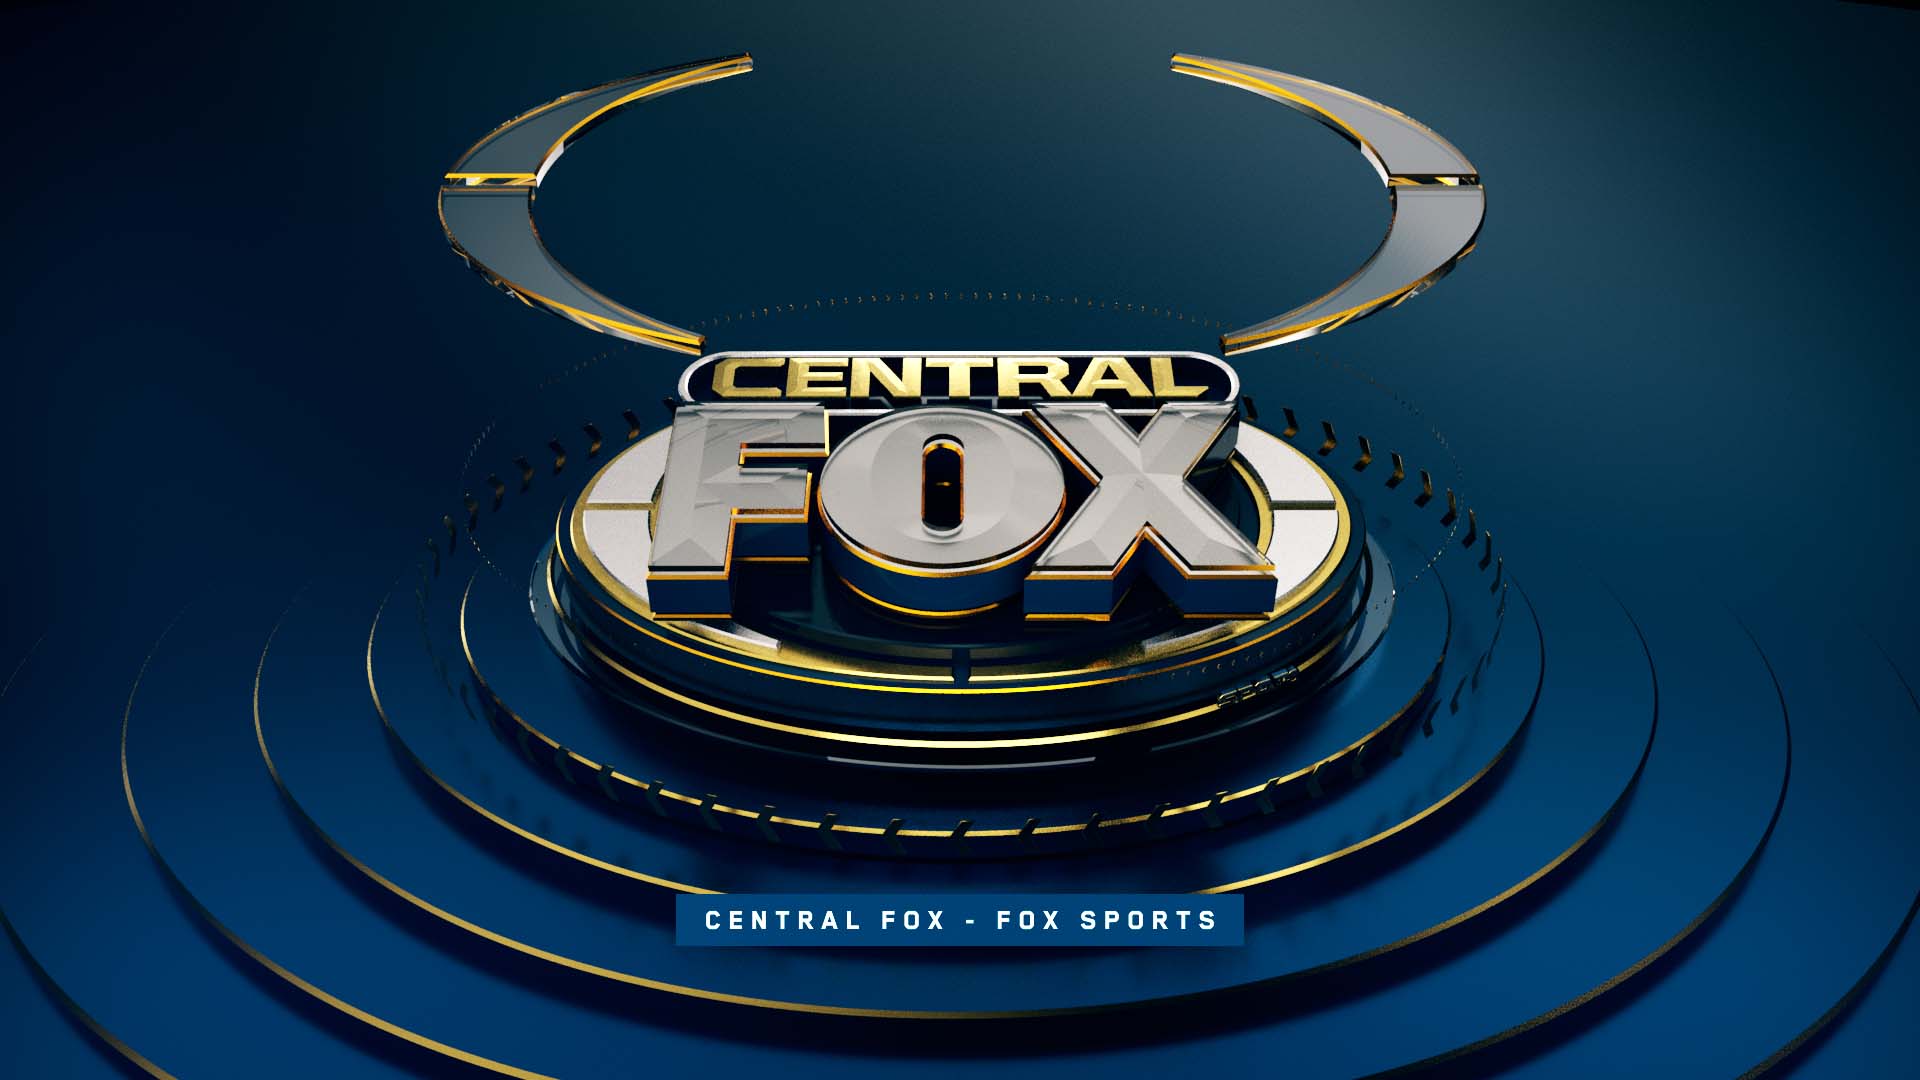 CENTRAL FOX